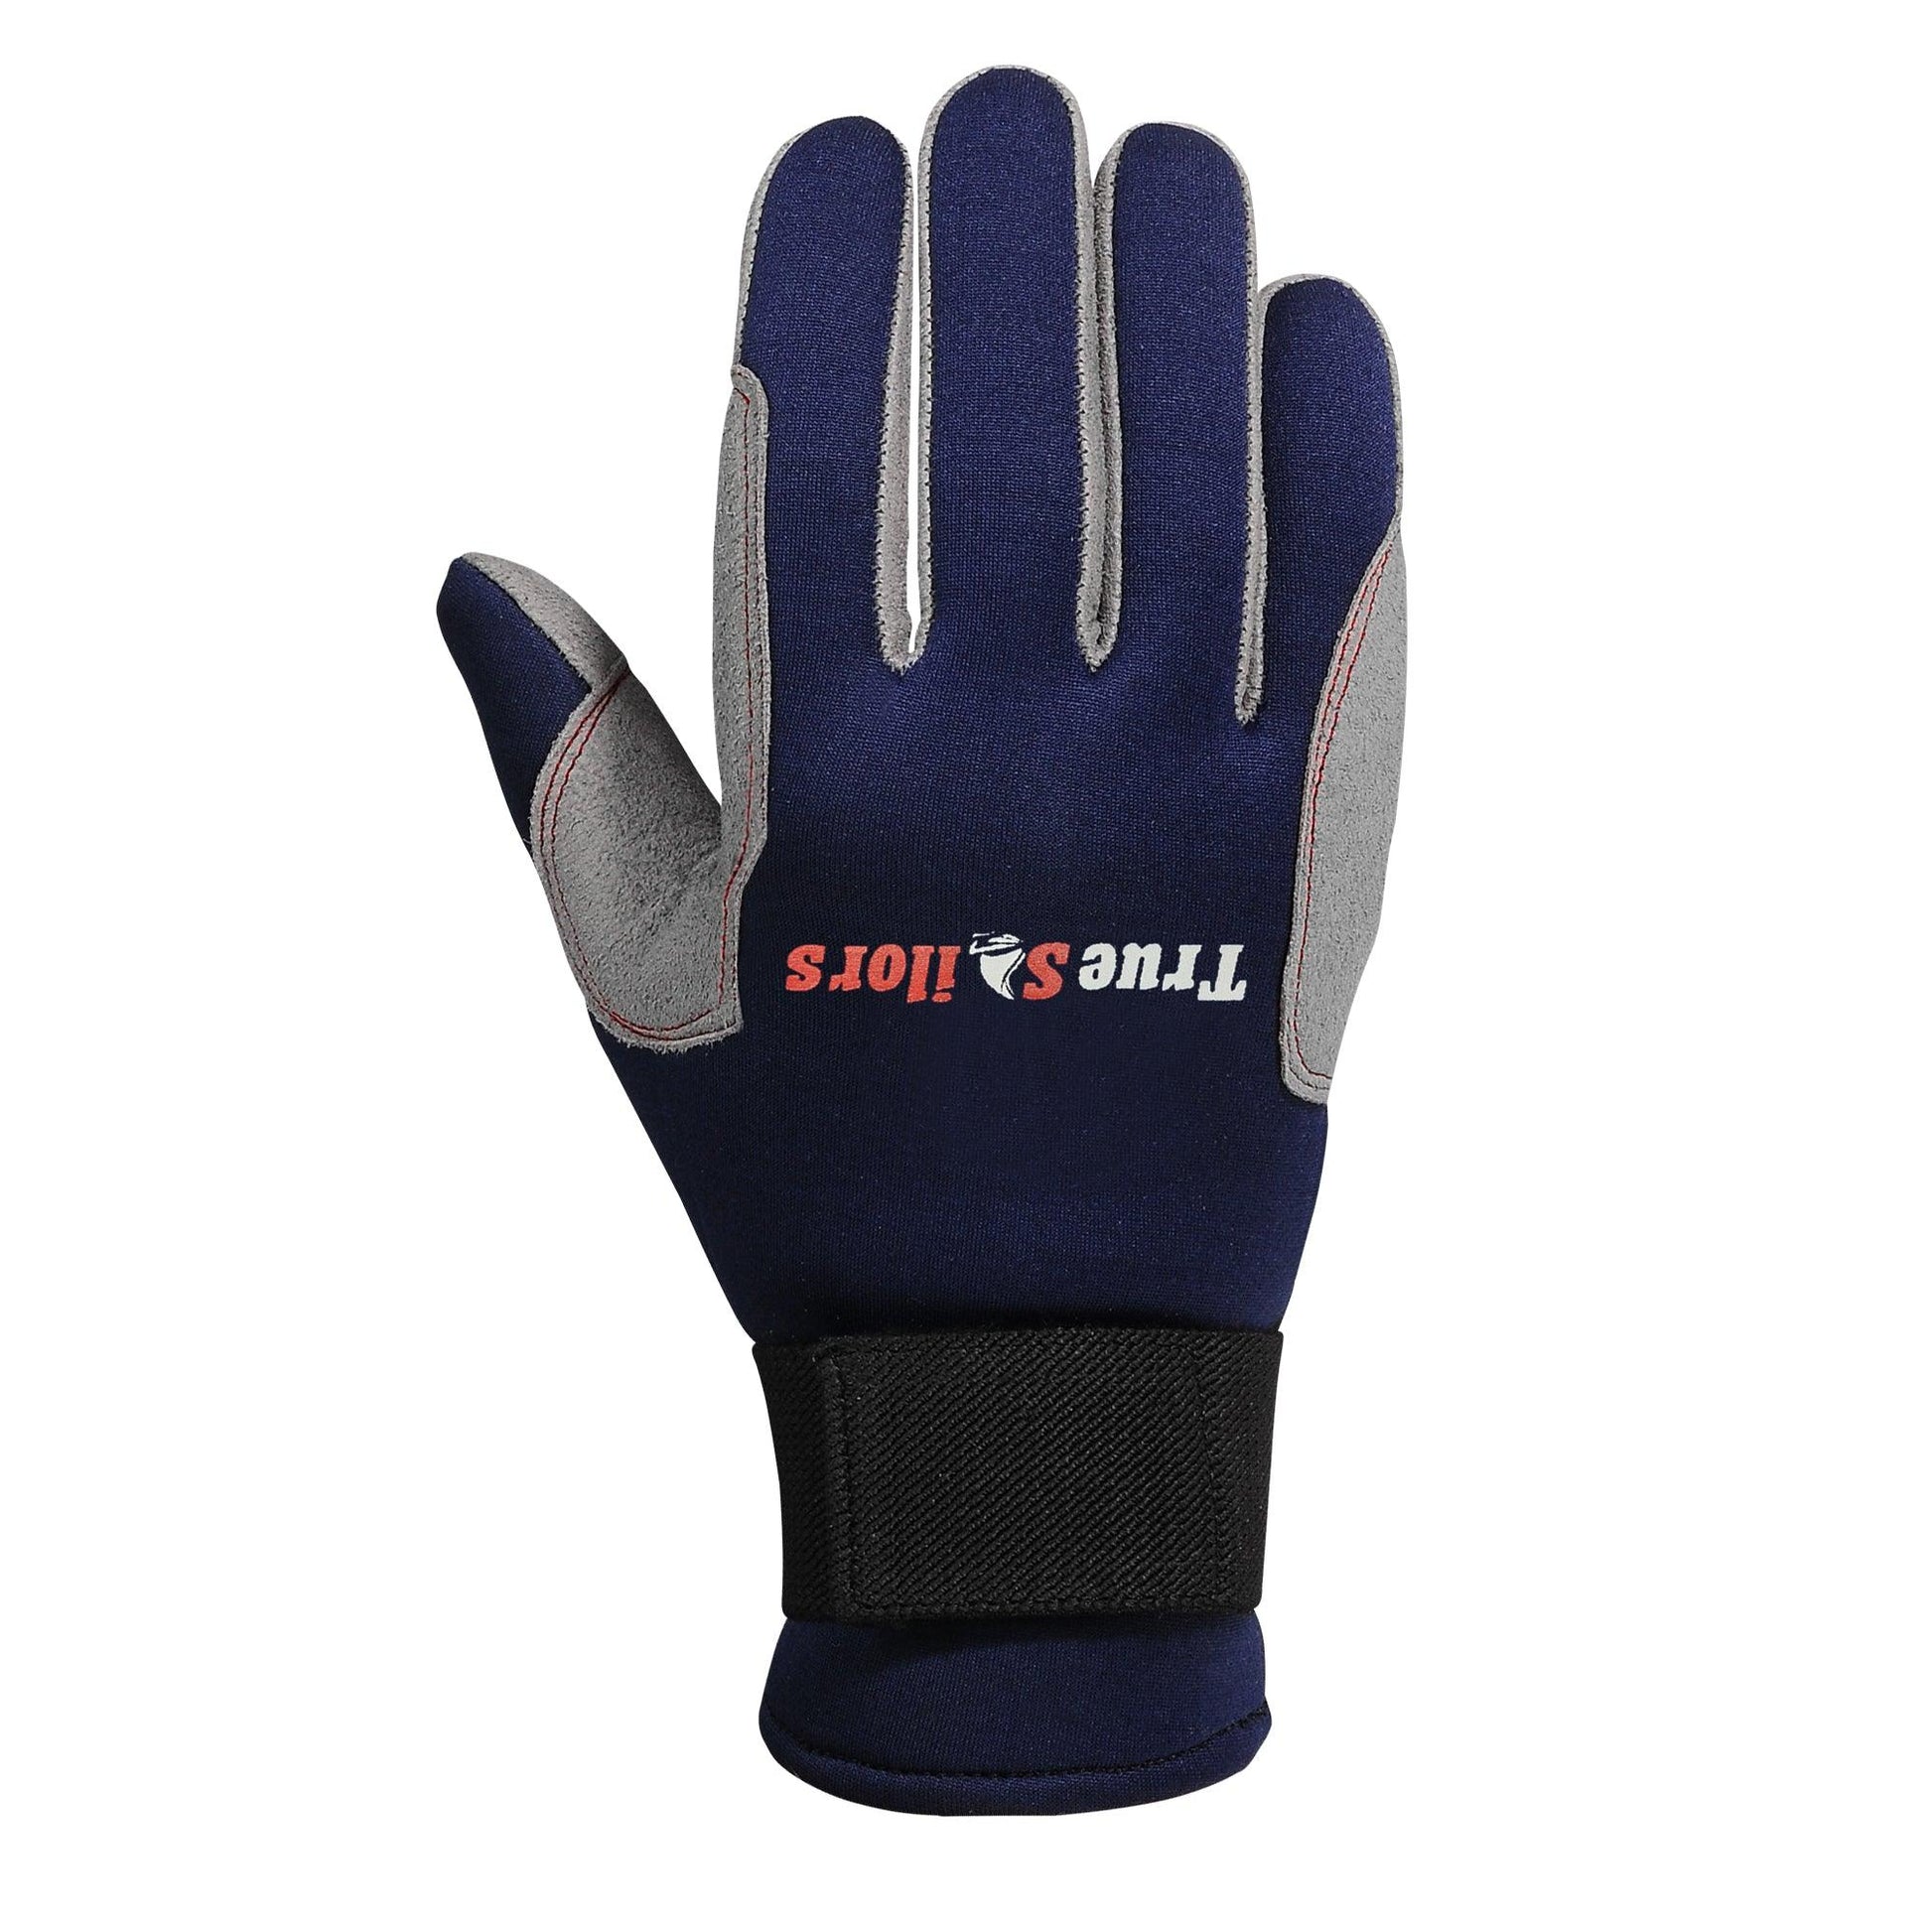 Sailing Gloves Full Finger Cold Weather Blue Grey Amara Neoprene - MRX Products 